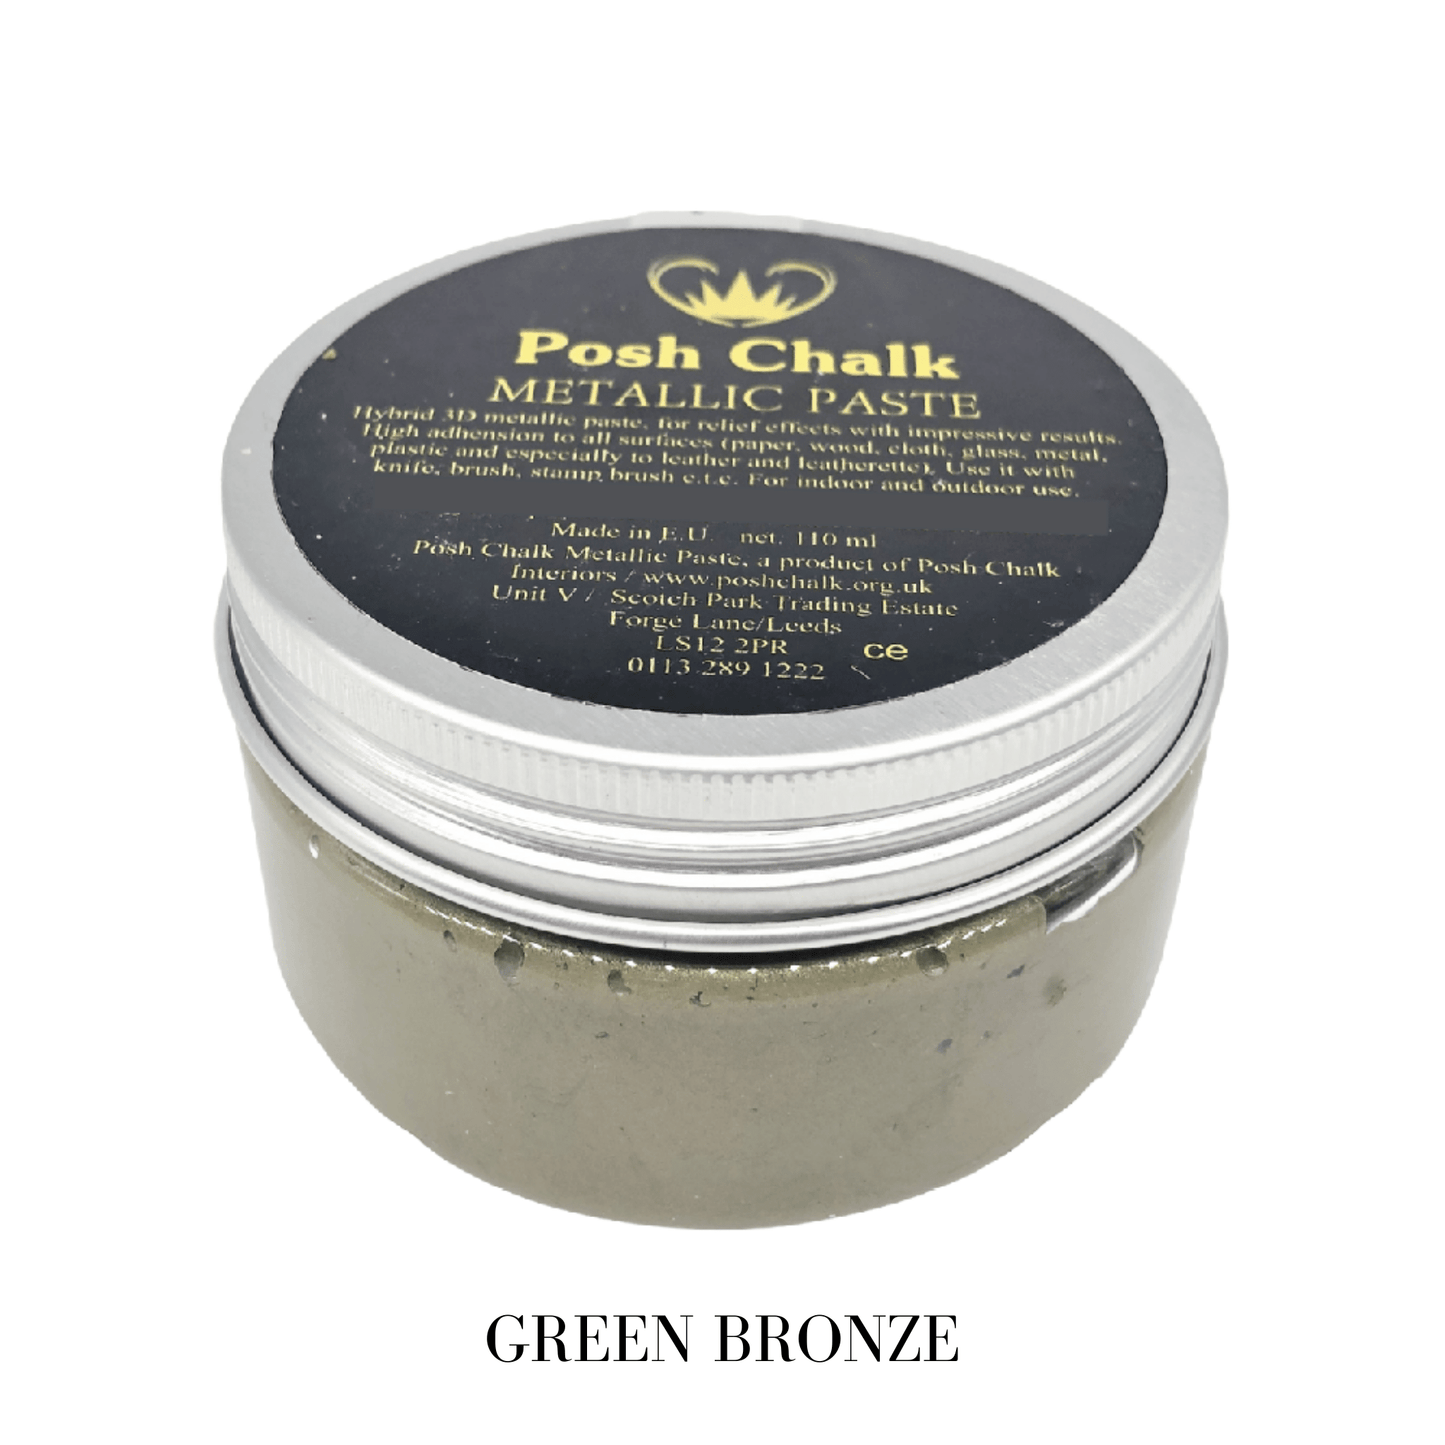 GREEN BRONZE Smooth Metallic Paste by Posh Chalk, Mixed Media - Raised Stencil Medium, 110ml pot